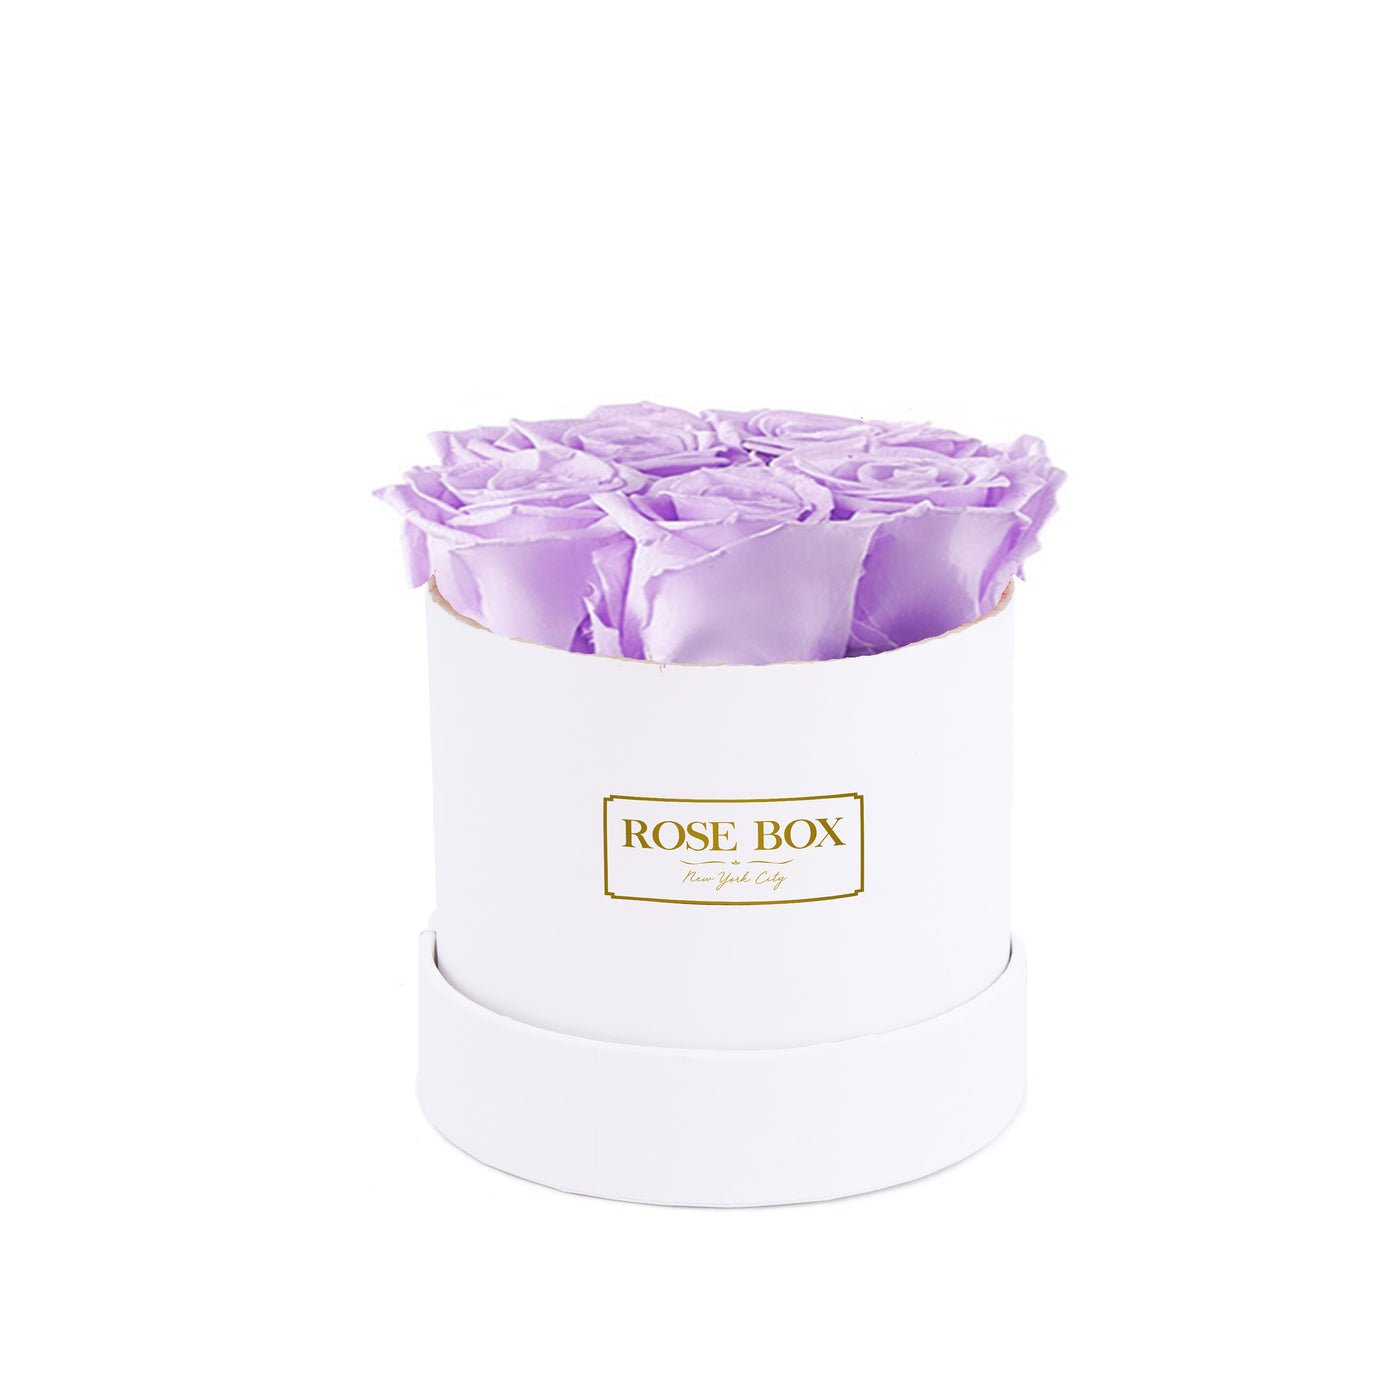 Mini White Box with Lavender Roses